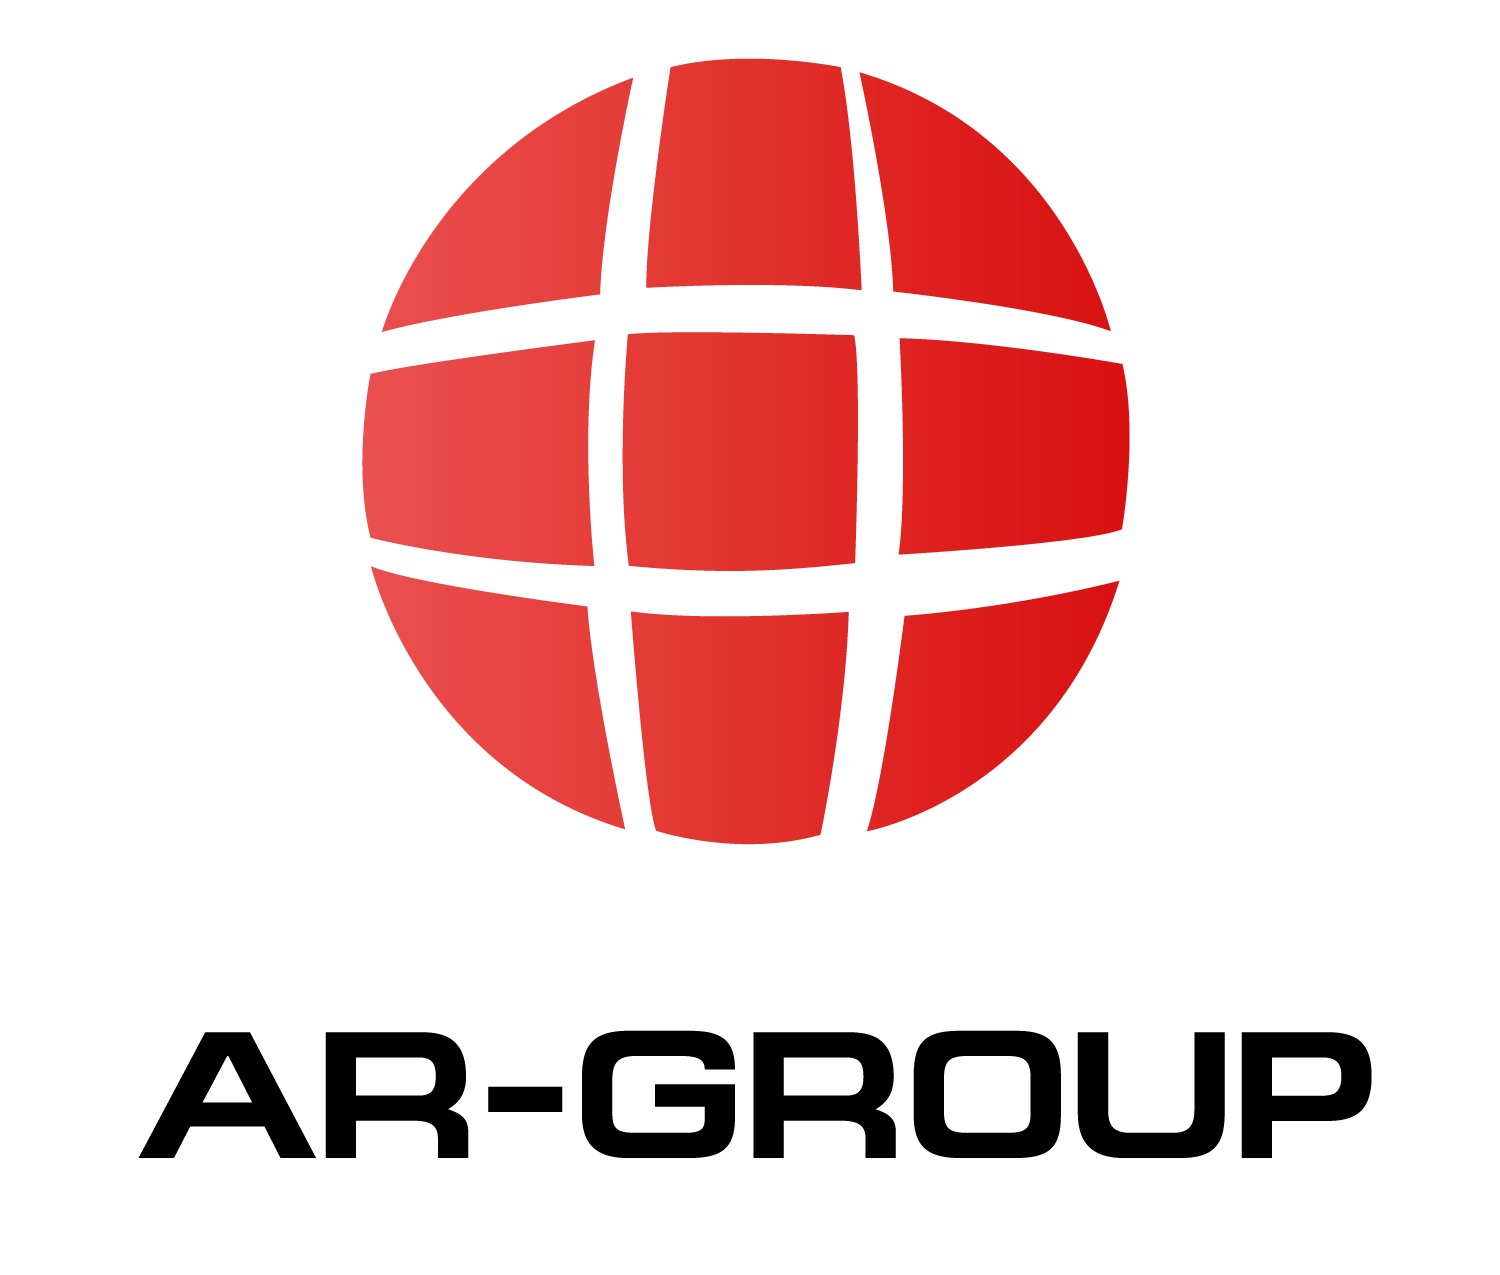 Ар групп лого. Логотип ar Group. Ар групп Сочи.